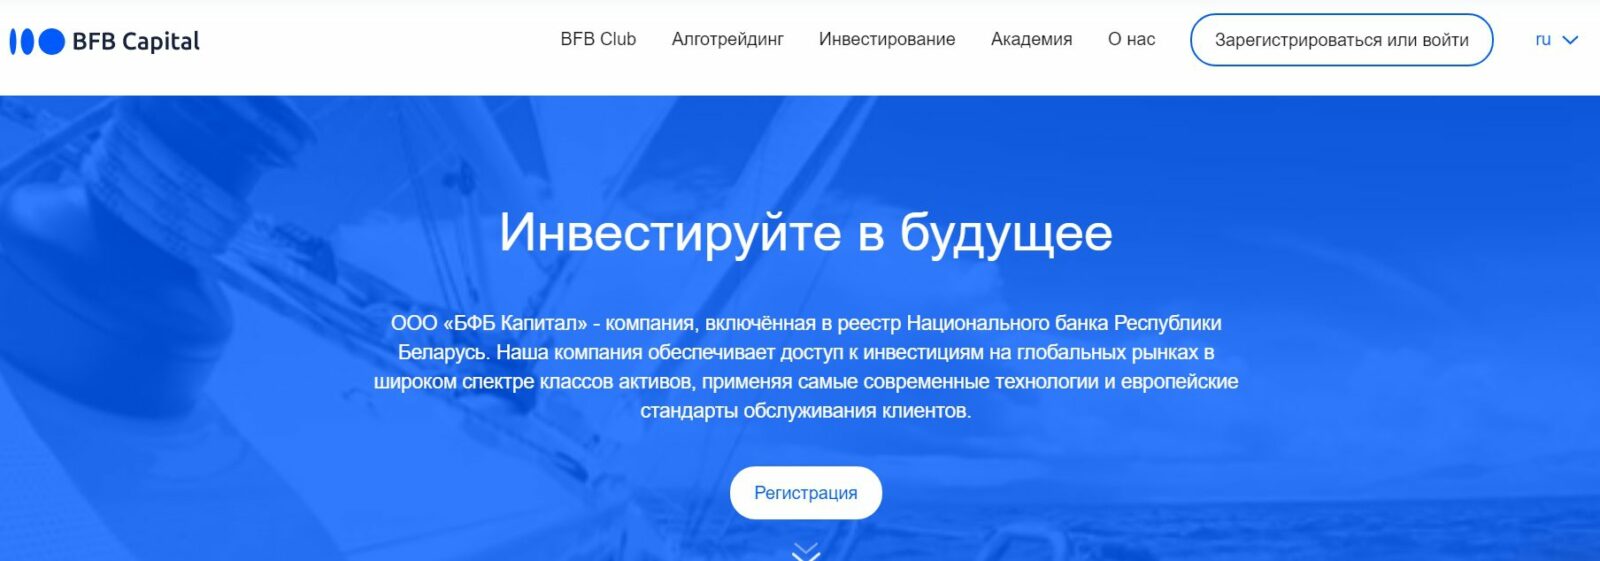 Сайт проекта БФБ Капитал